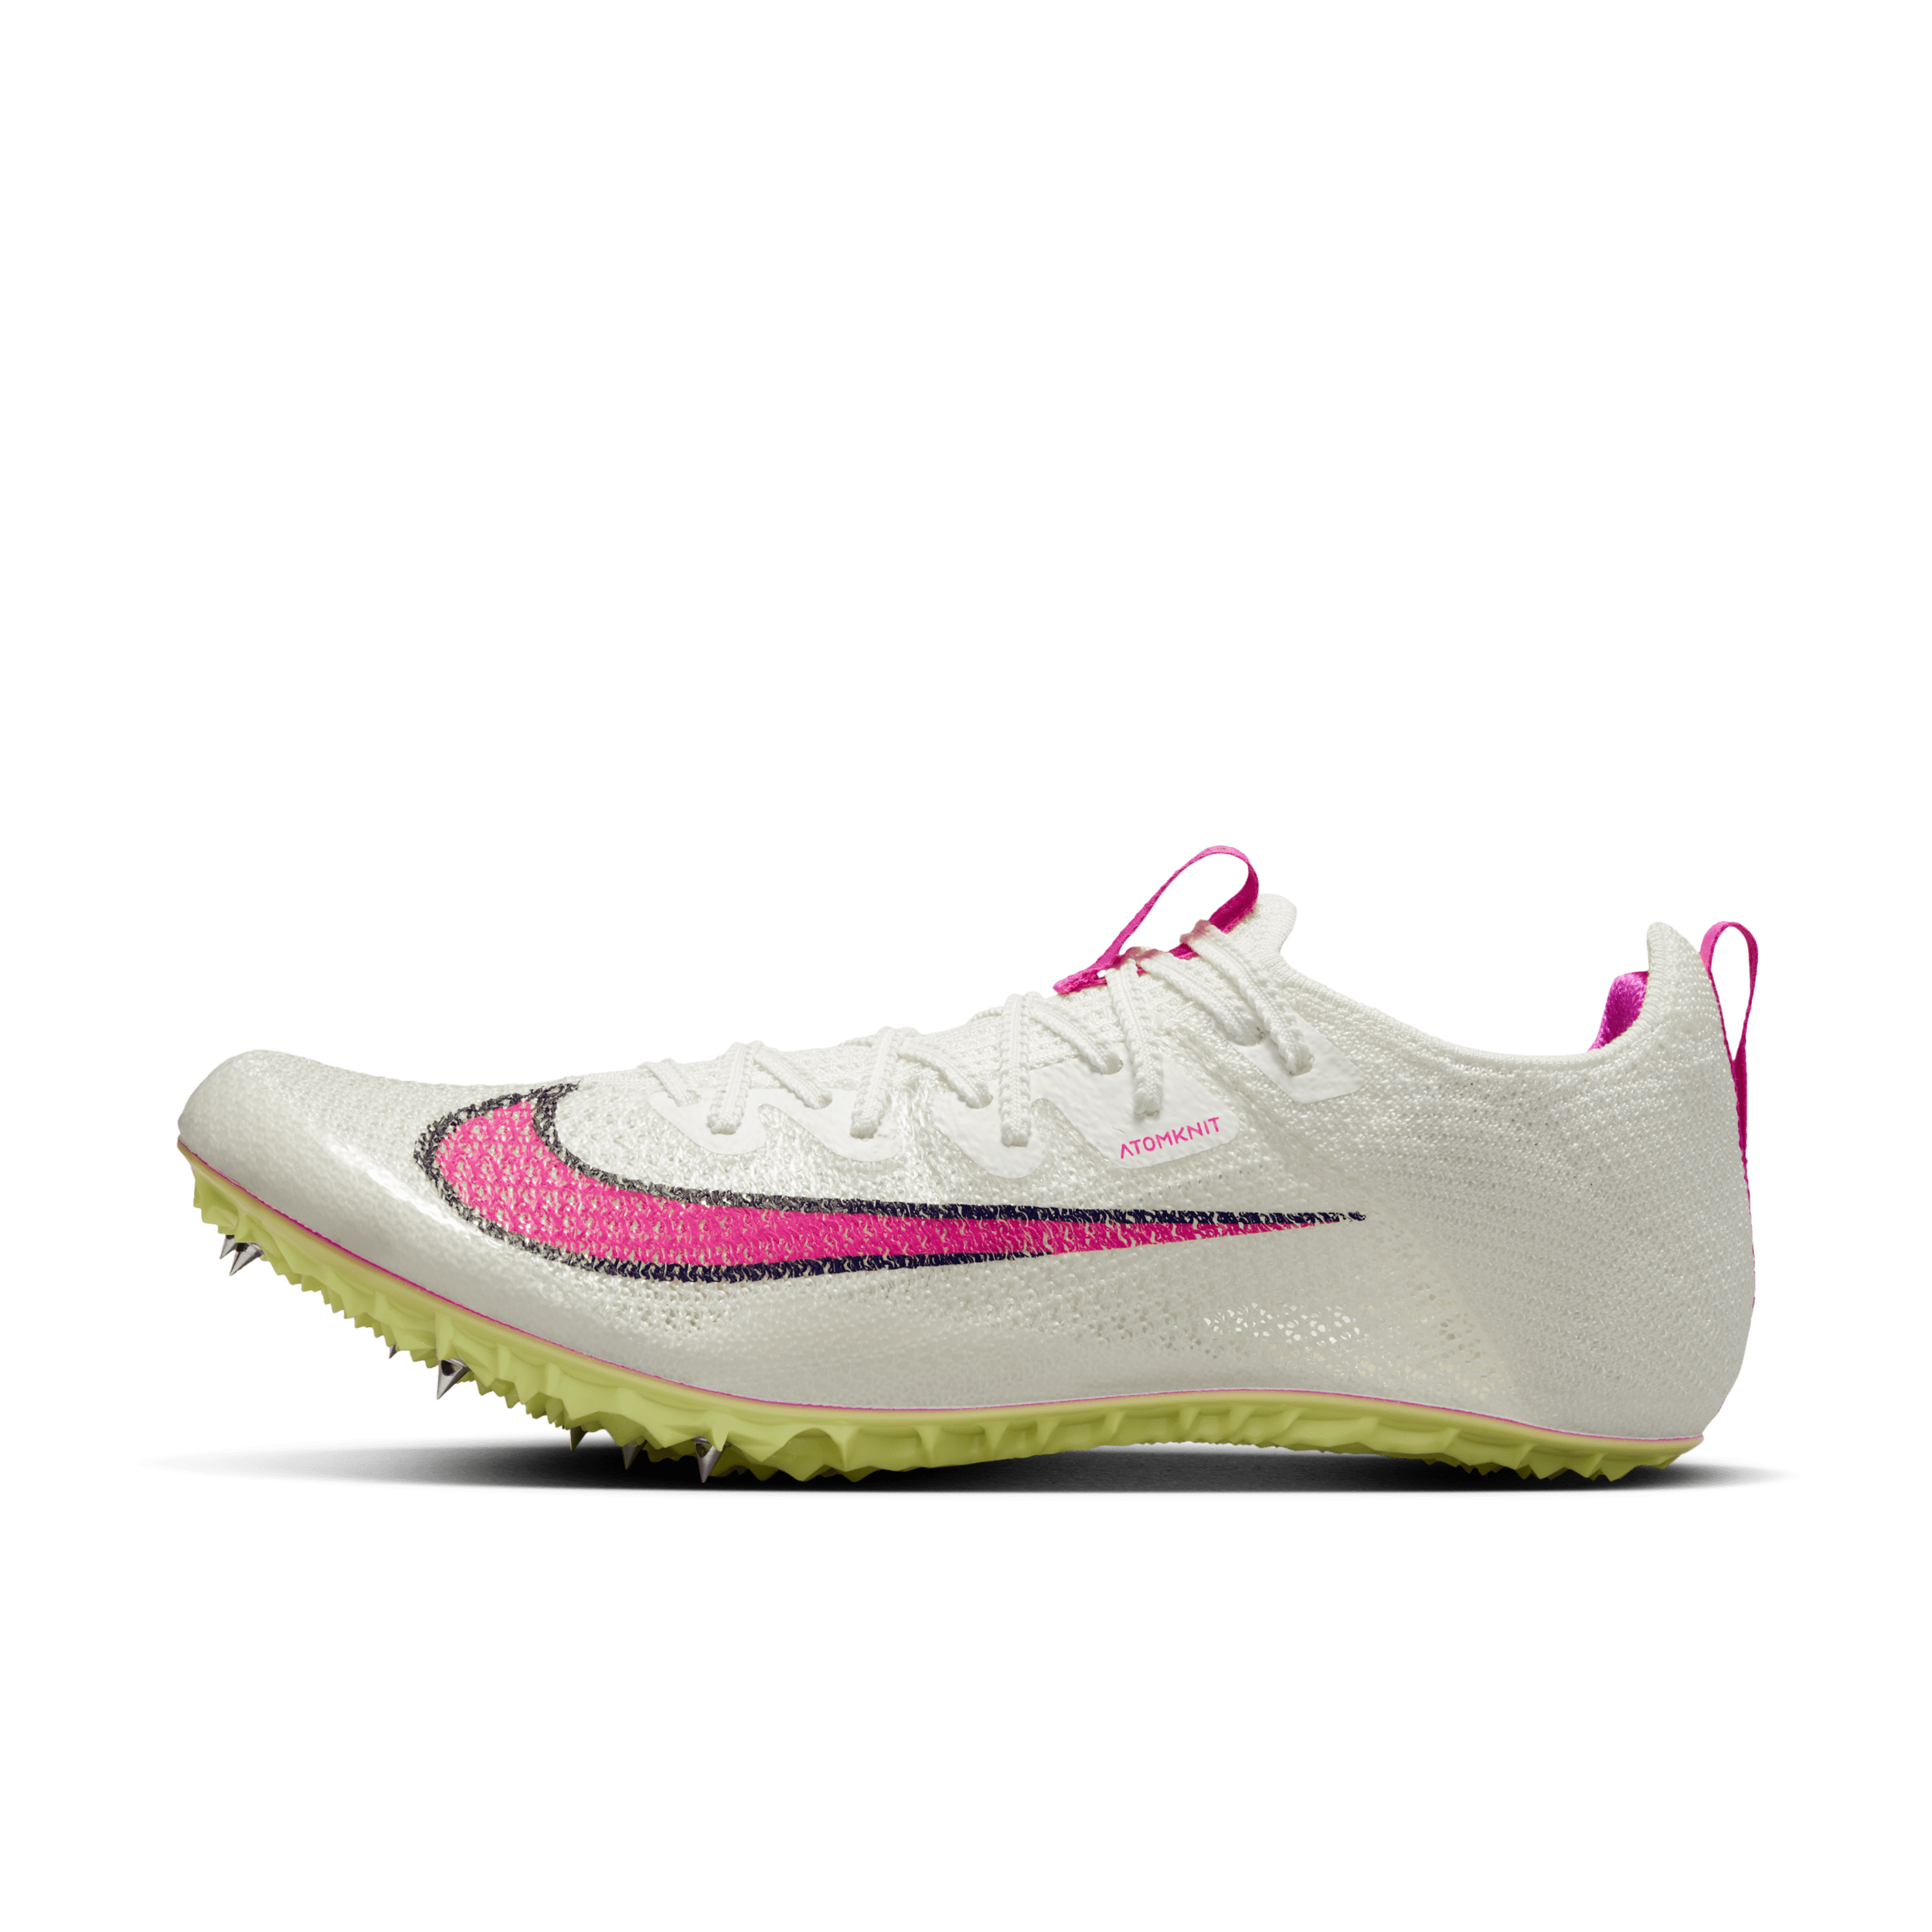 Scarpa chiodata per lo sprint Nike Zoom Superfly Elite 2 - Bianco